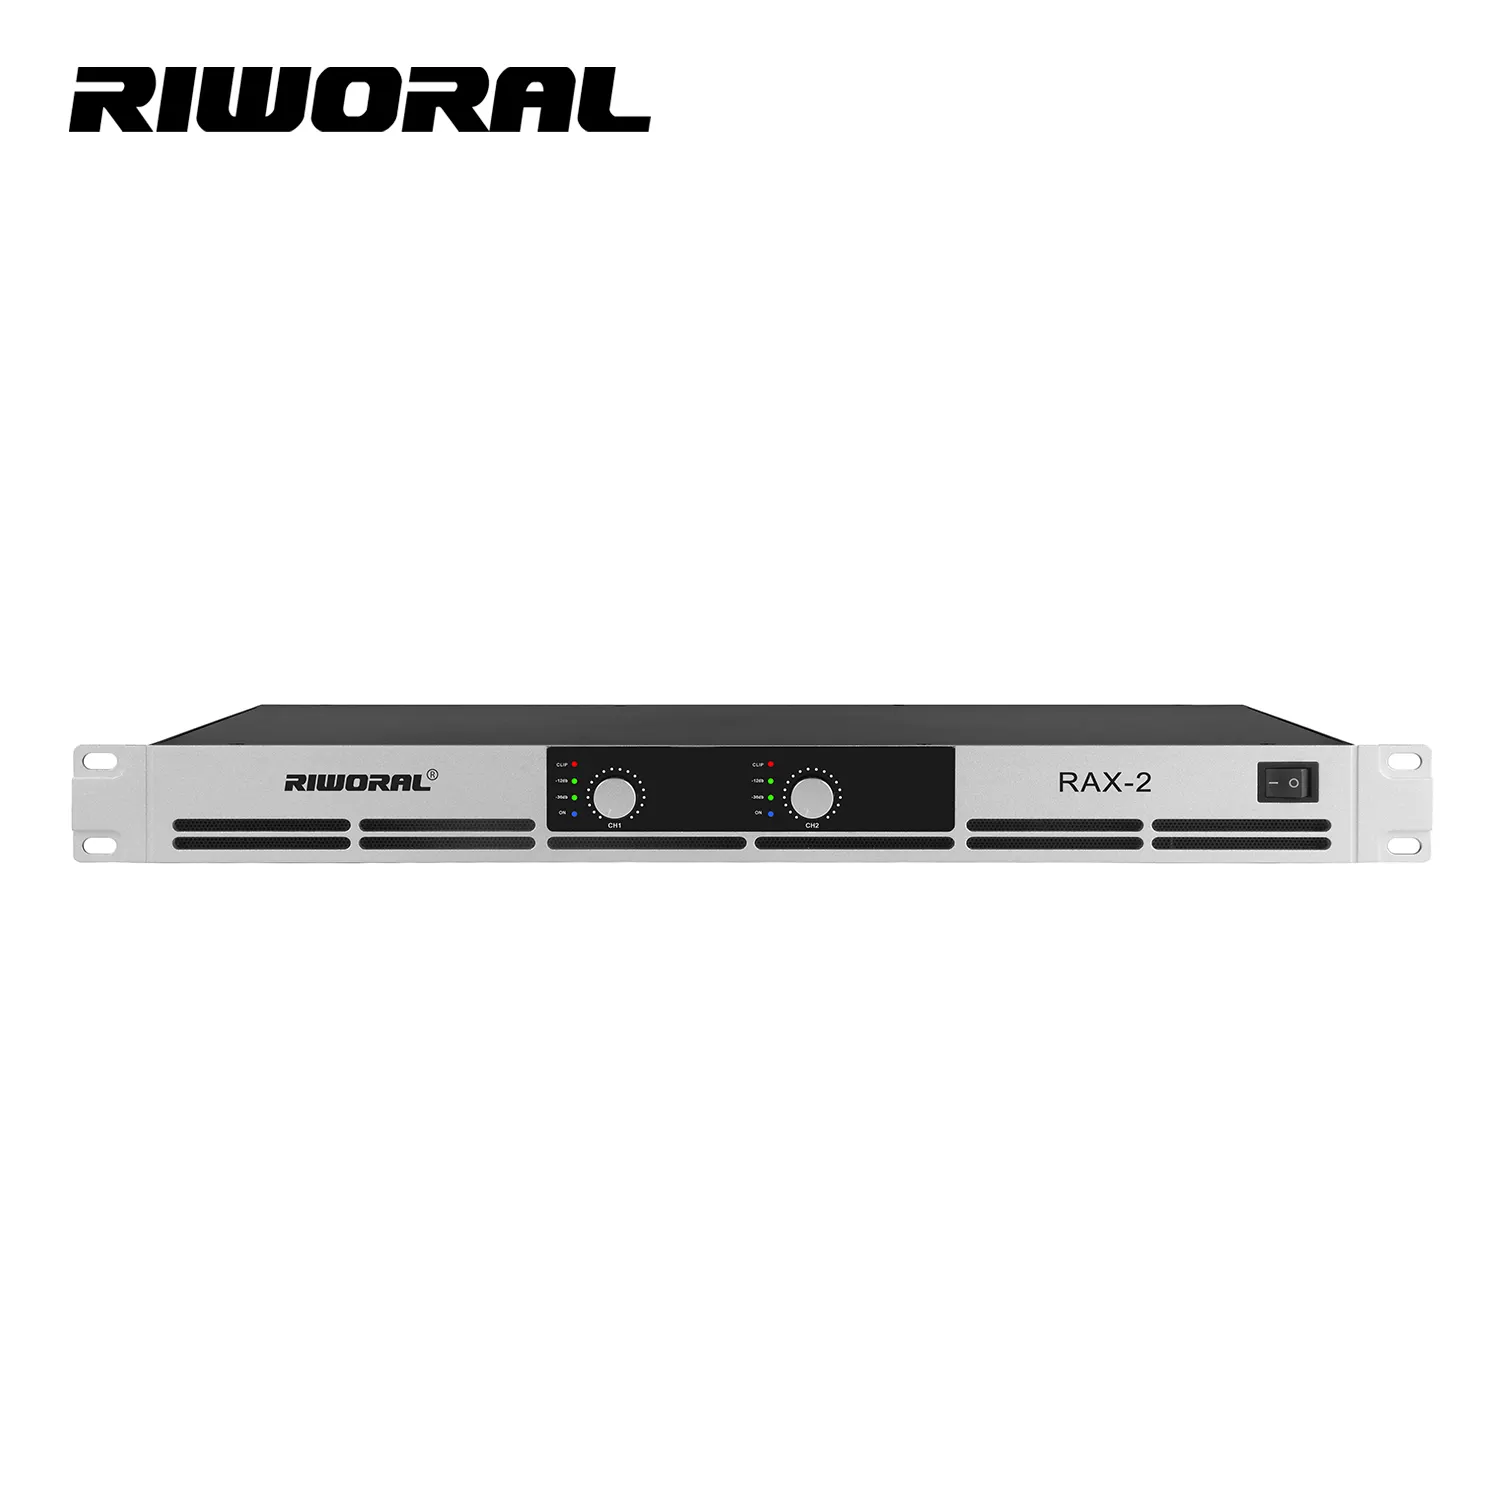 RAX-2 Riworal 1U 2 channels 1600W power amplifier professional Class D best price power amp